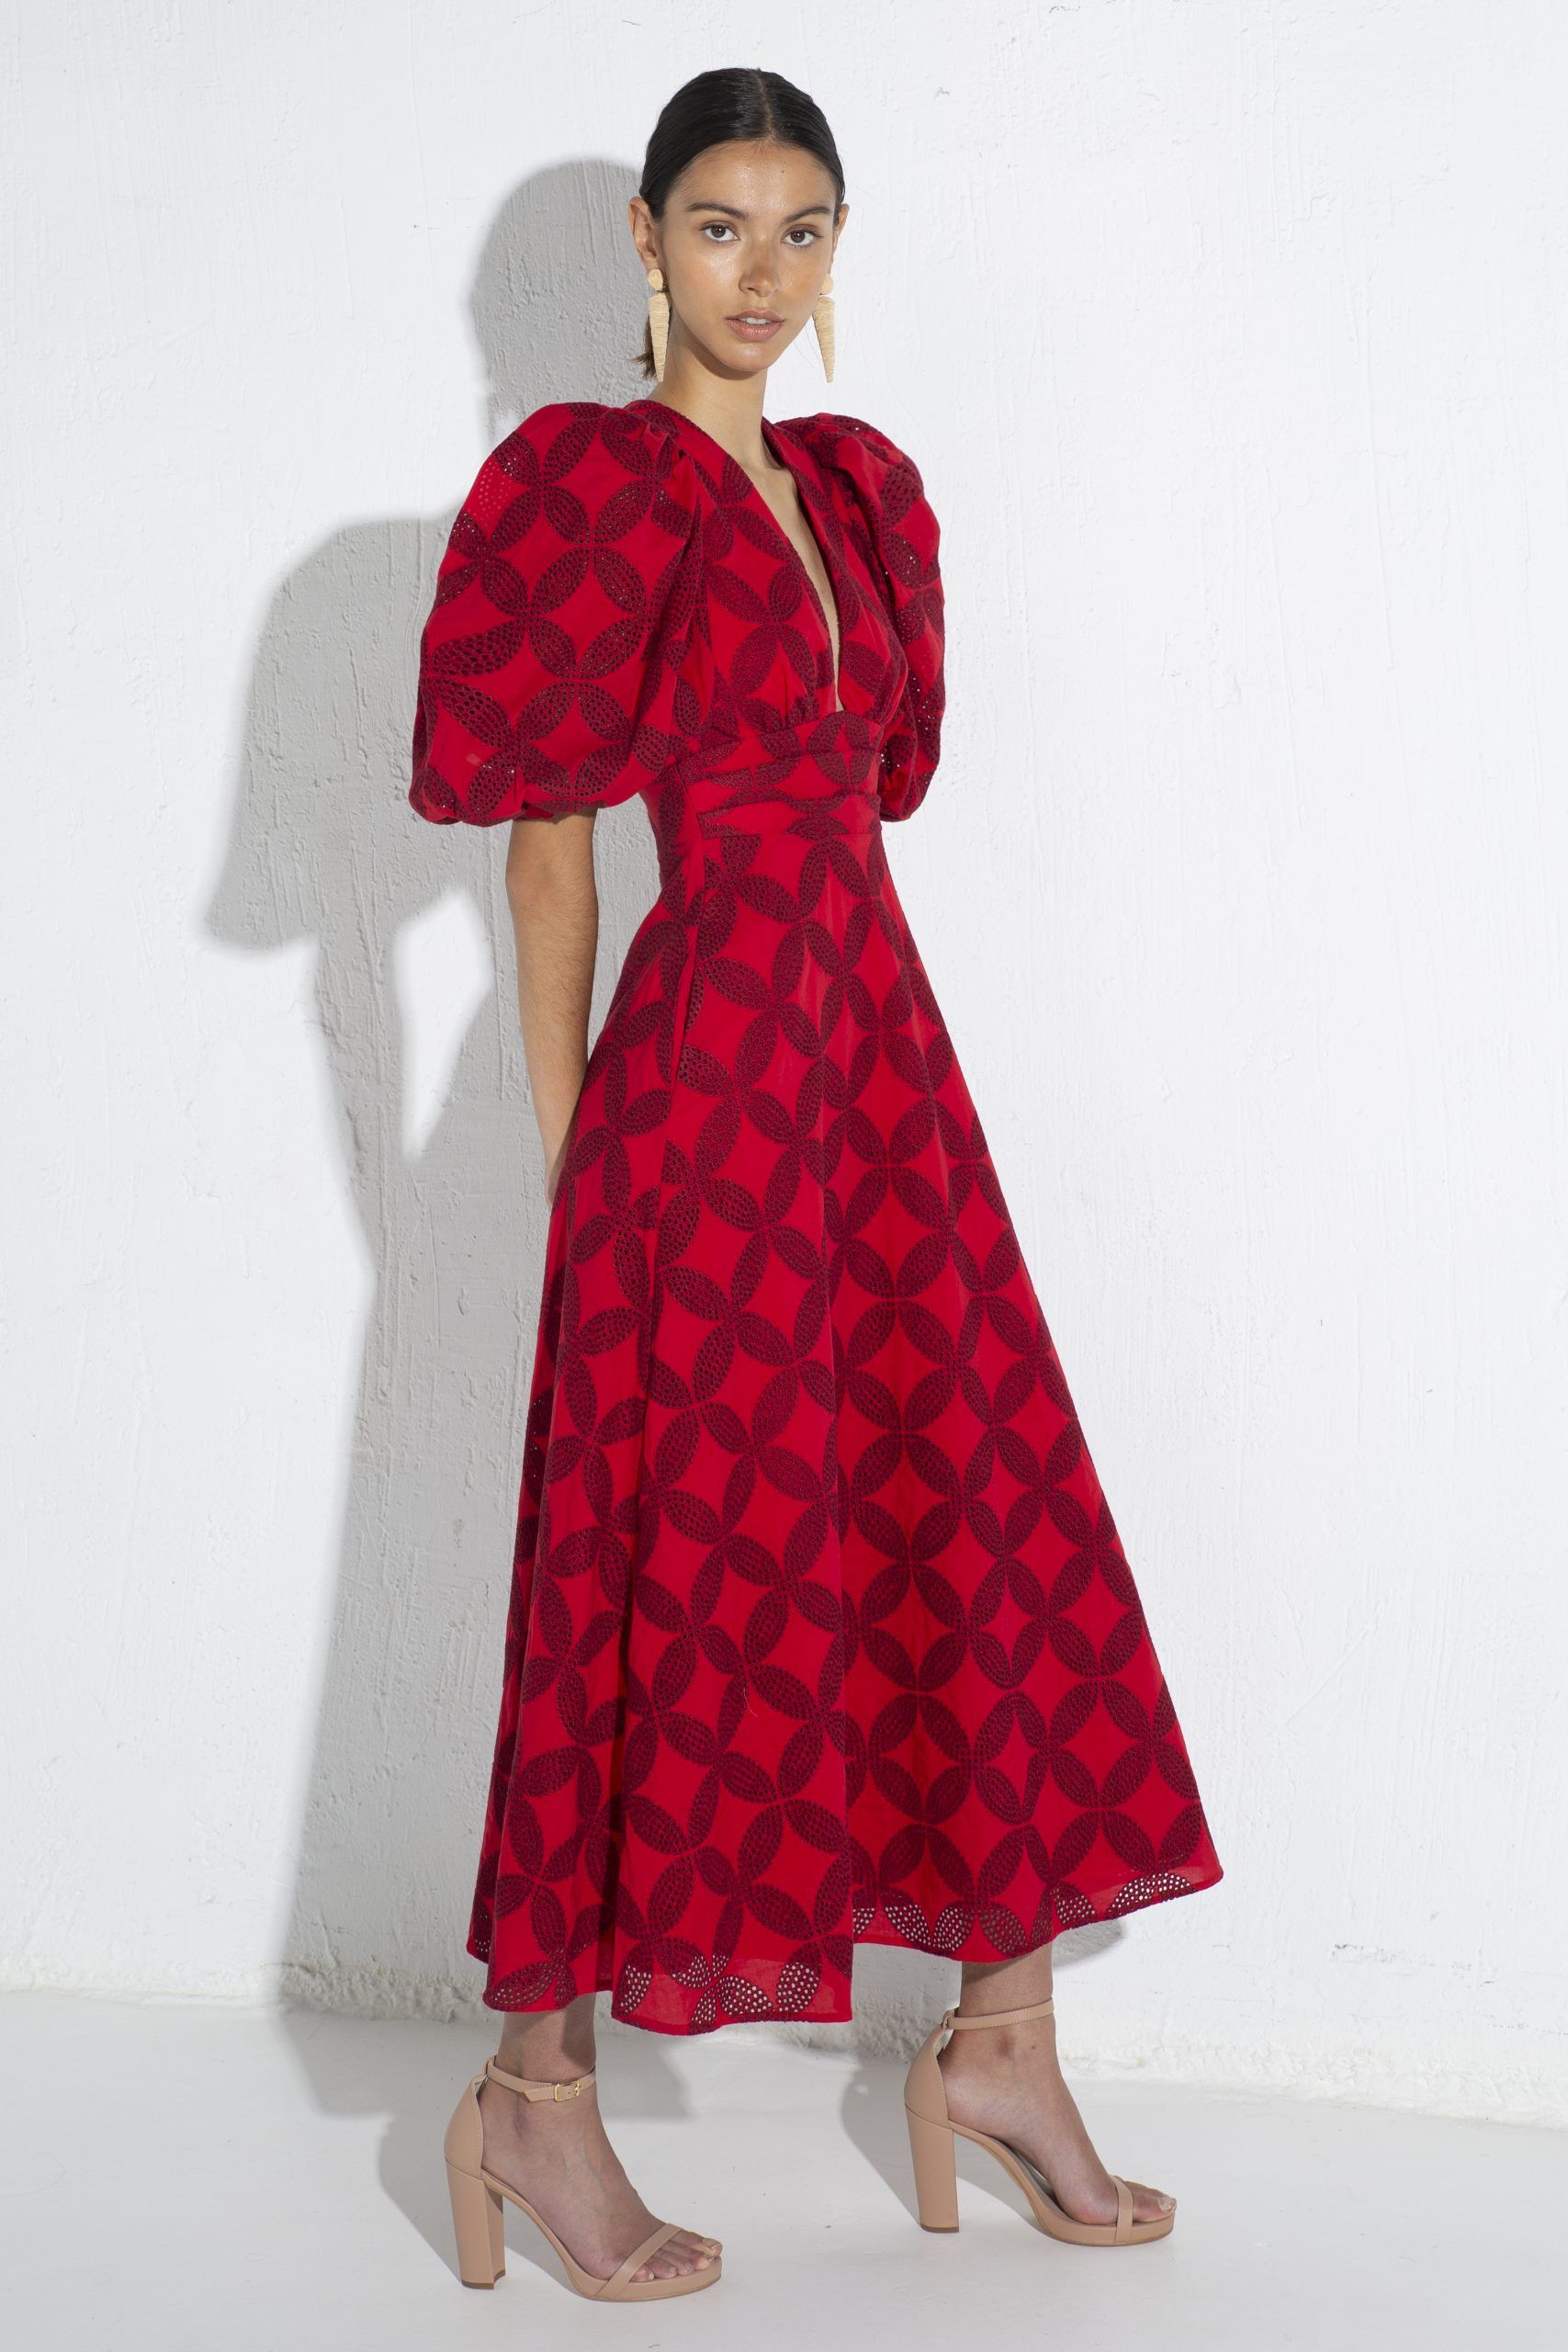 hamilton-acler-vestido-rojo